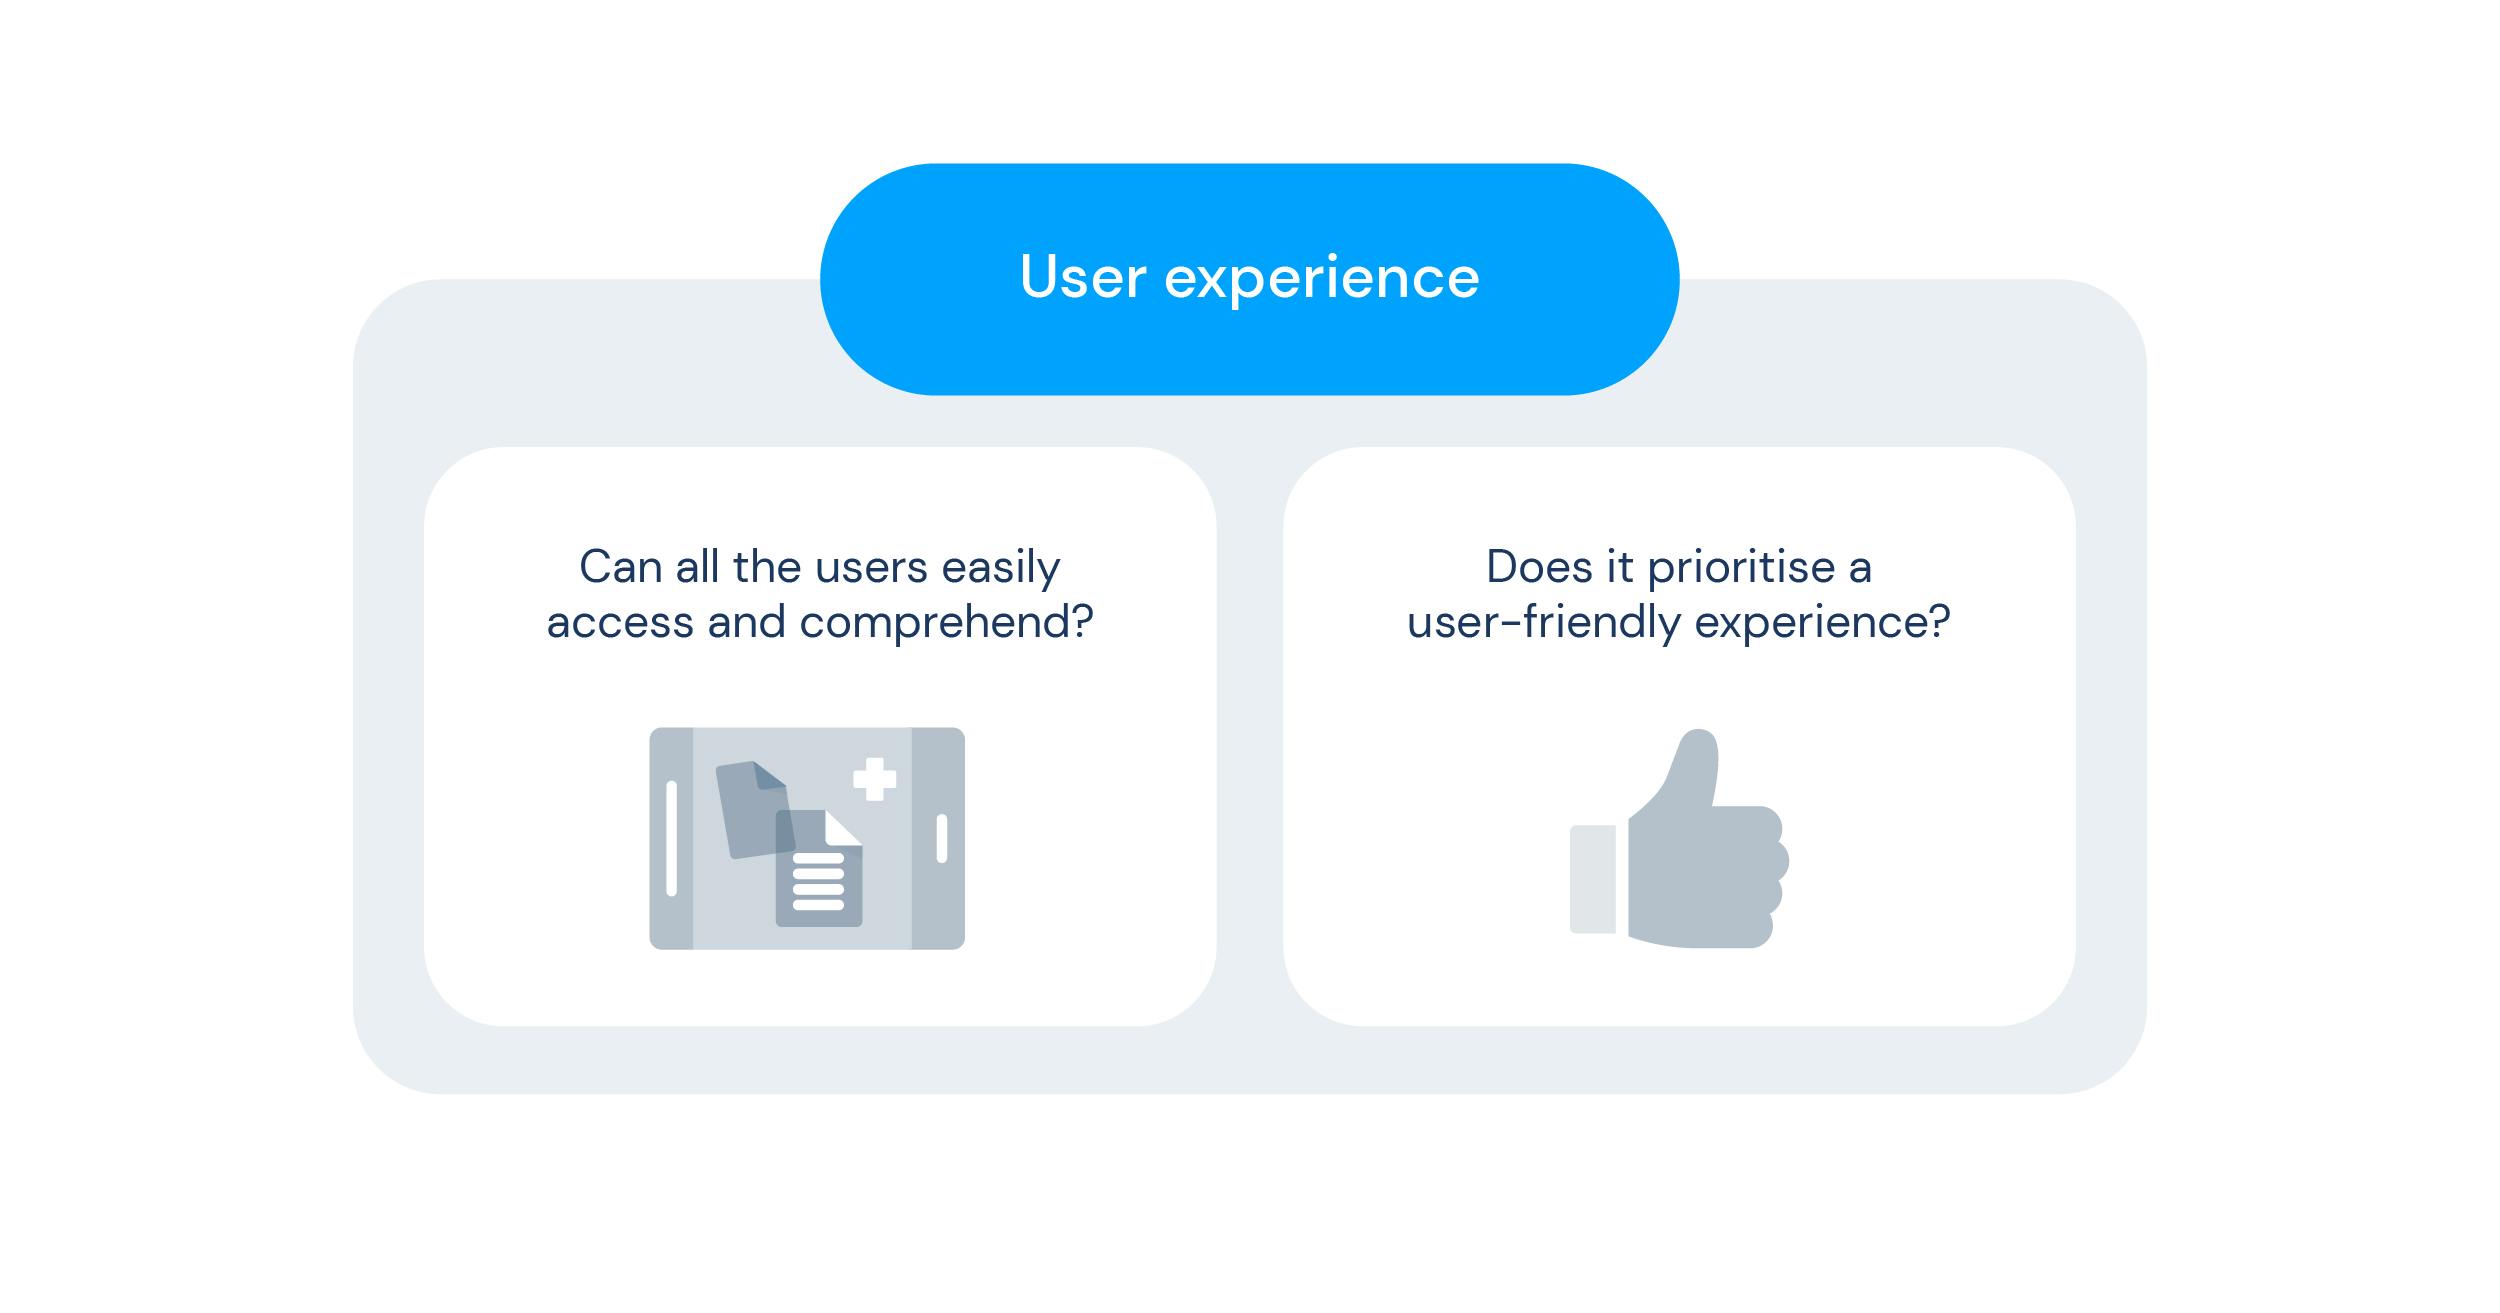 User experience as a key consideration when choosing a health platform